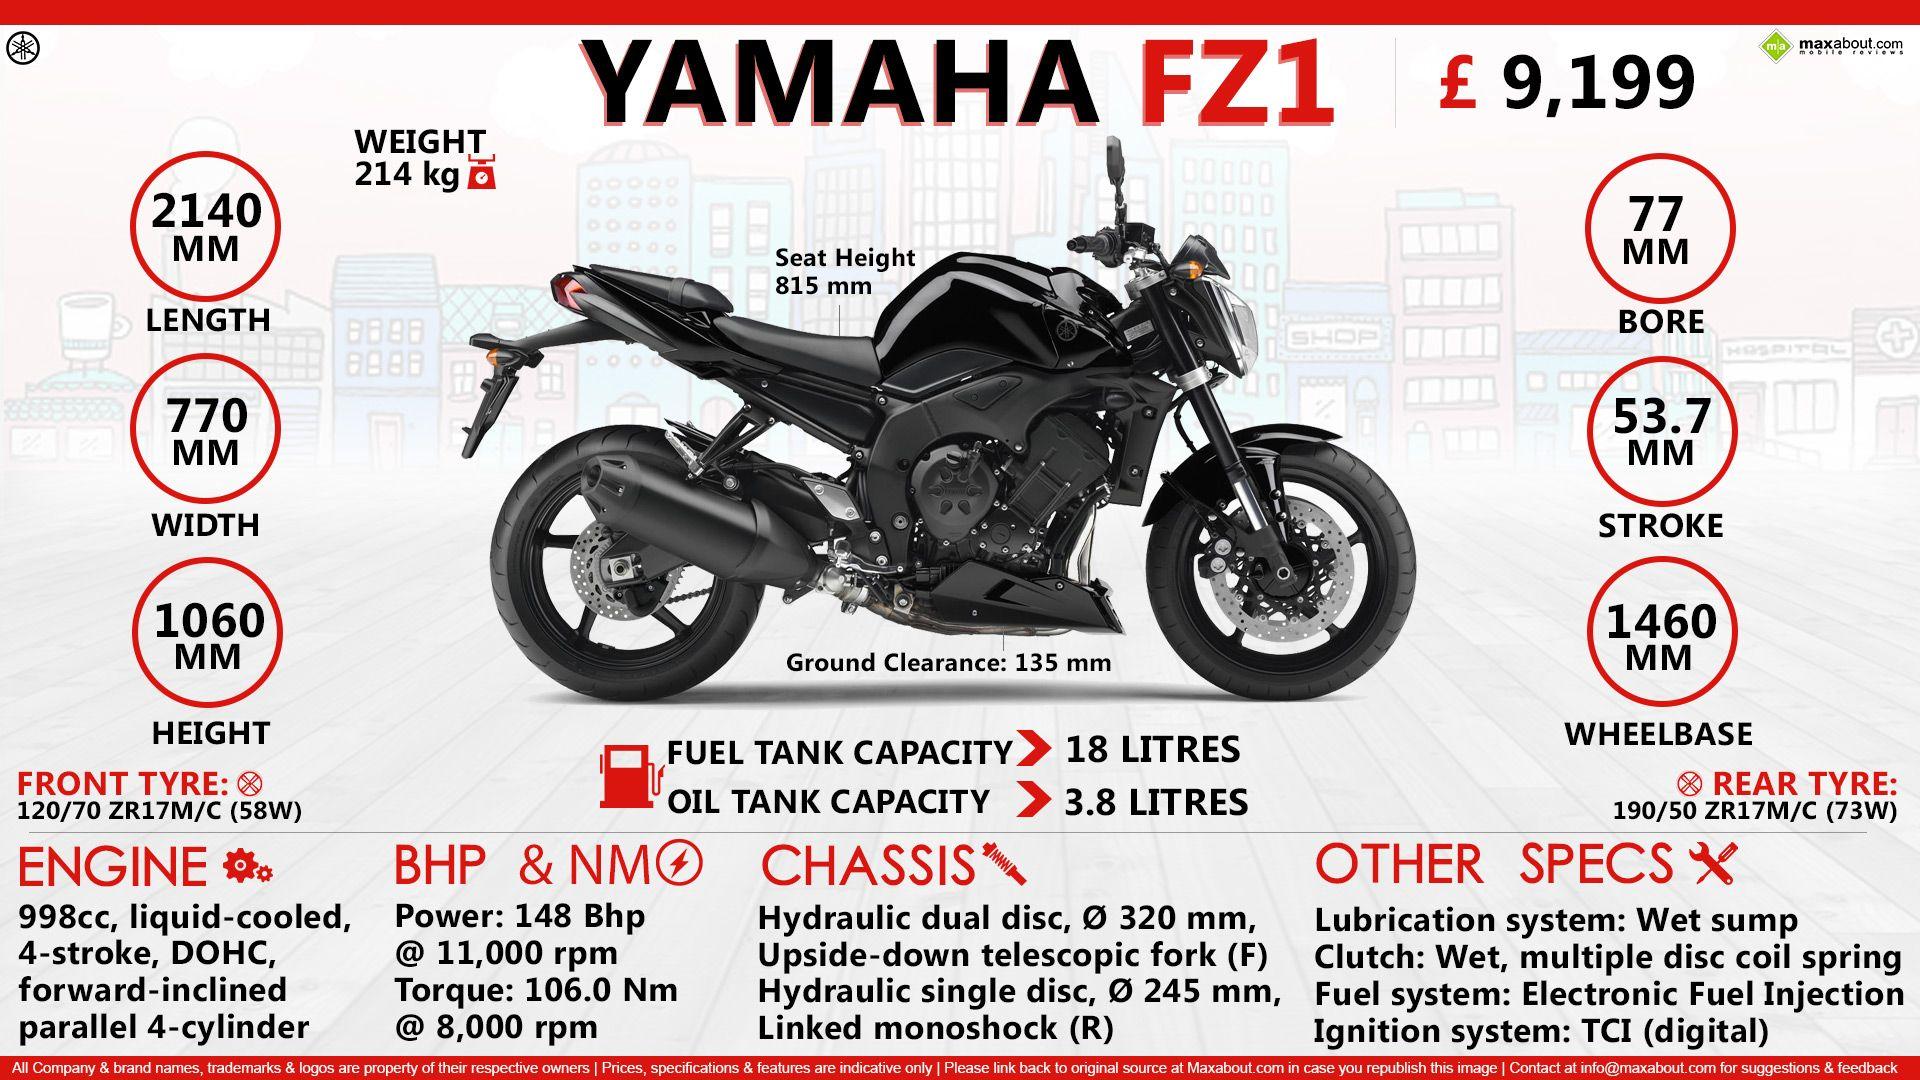 Honda высота по седлу. Yamaha fz1 двигатель. Ямаха fz1. Размеры Yamaha fz1. Fz1 Yamaha высота по седлу.